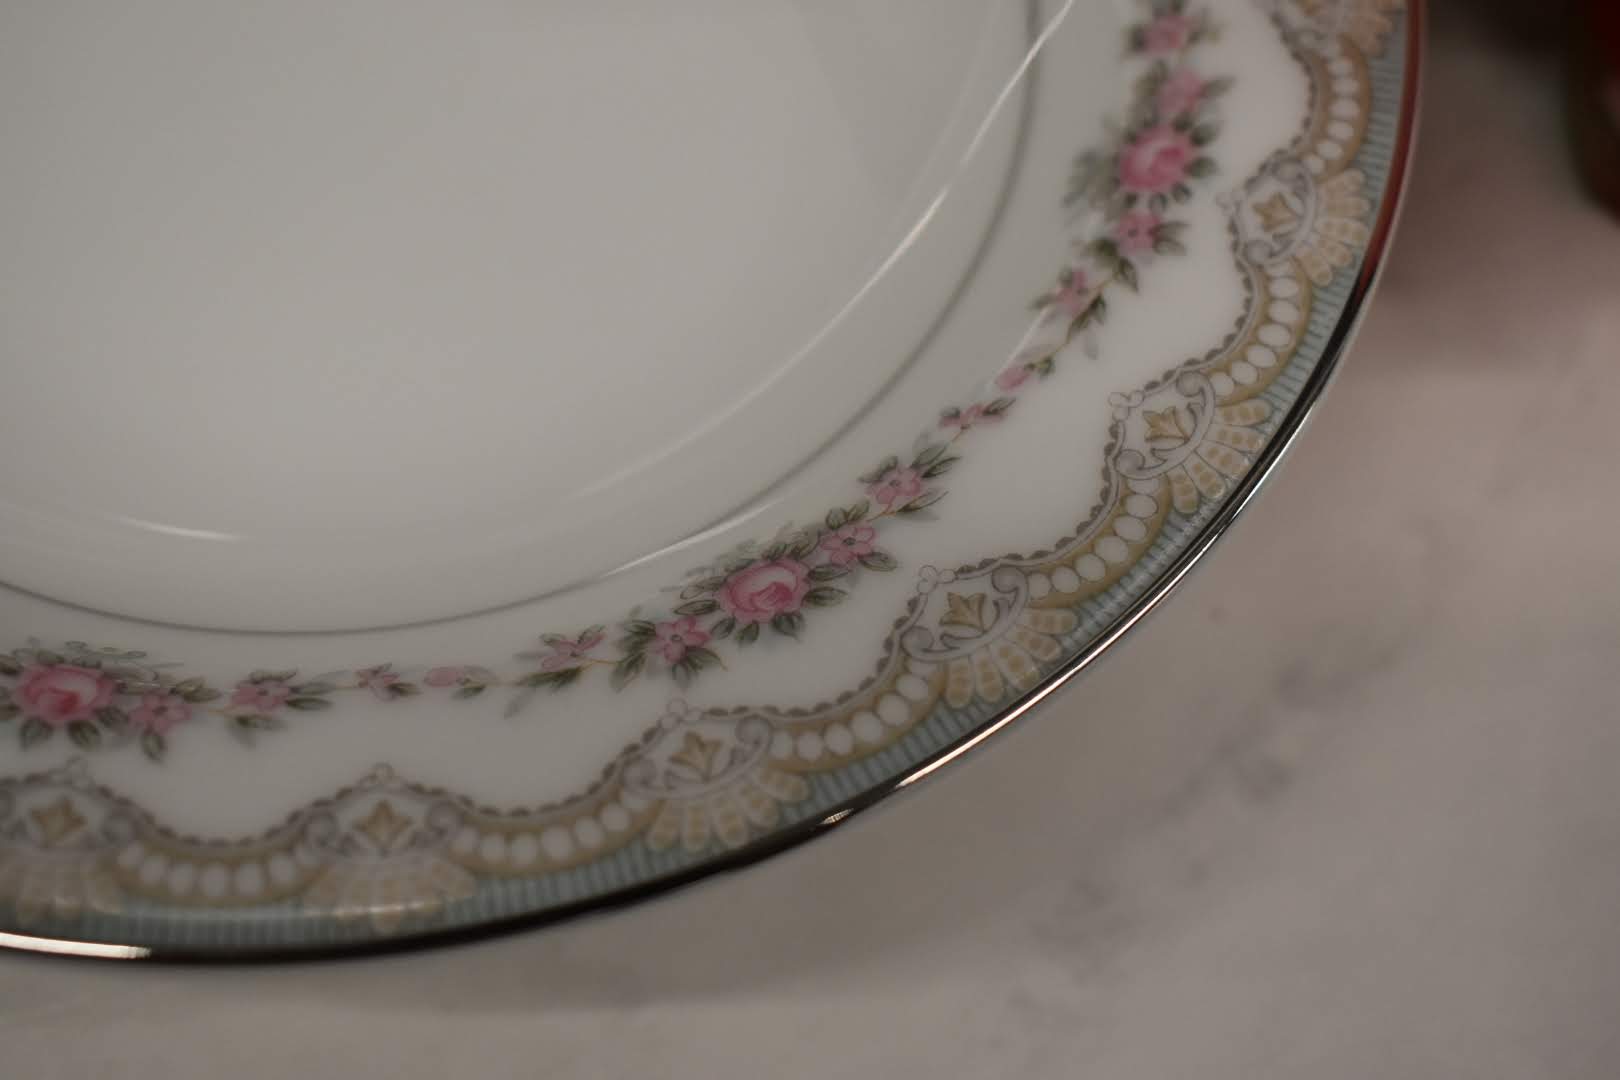 Noritake Glenwood - Fine Porcelain China - 5770 pattern - Small Round Vegetable Bowl